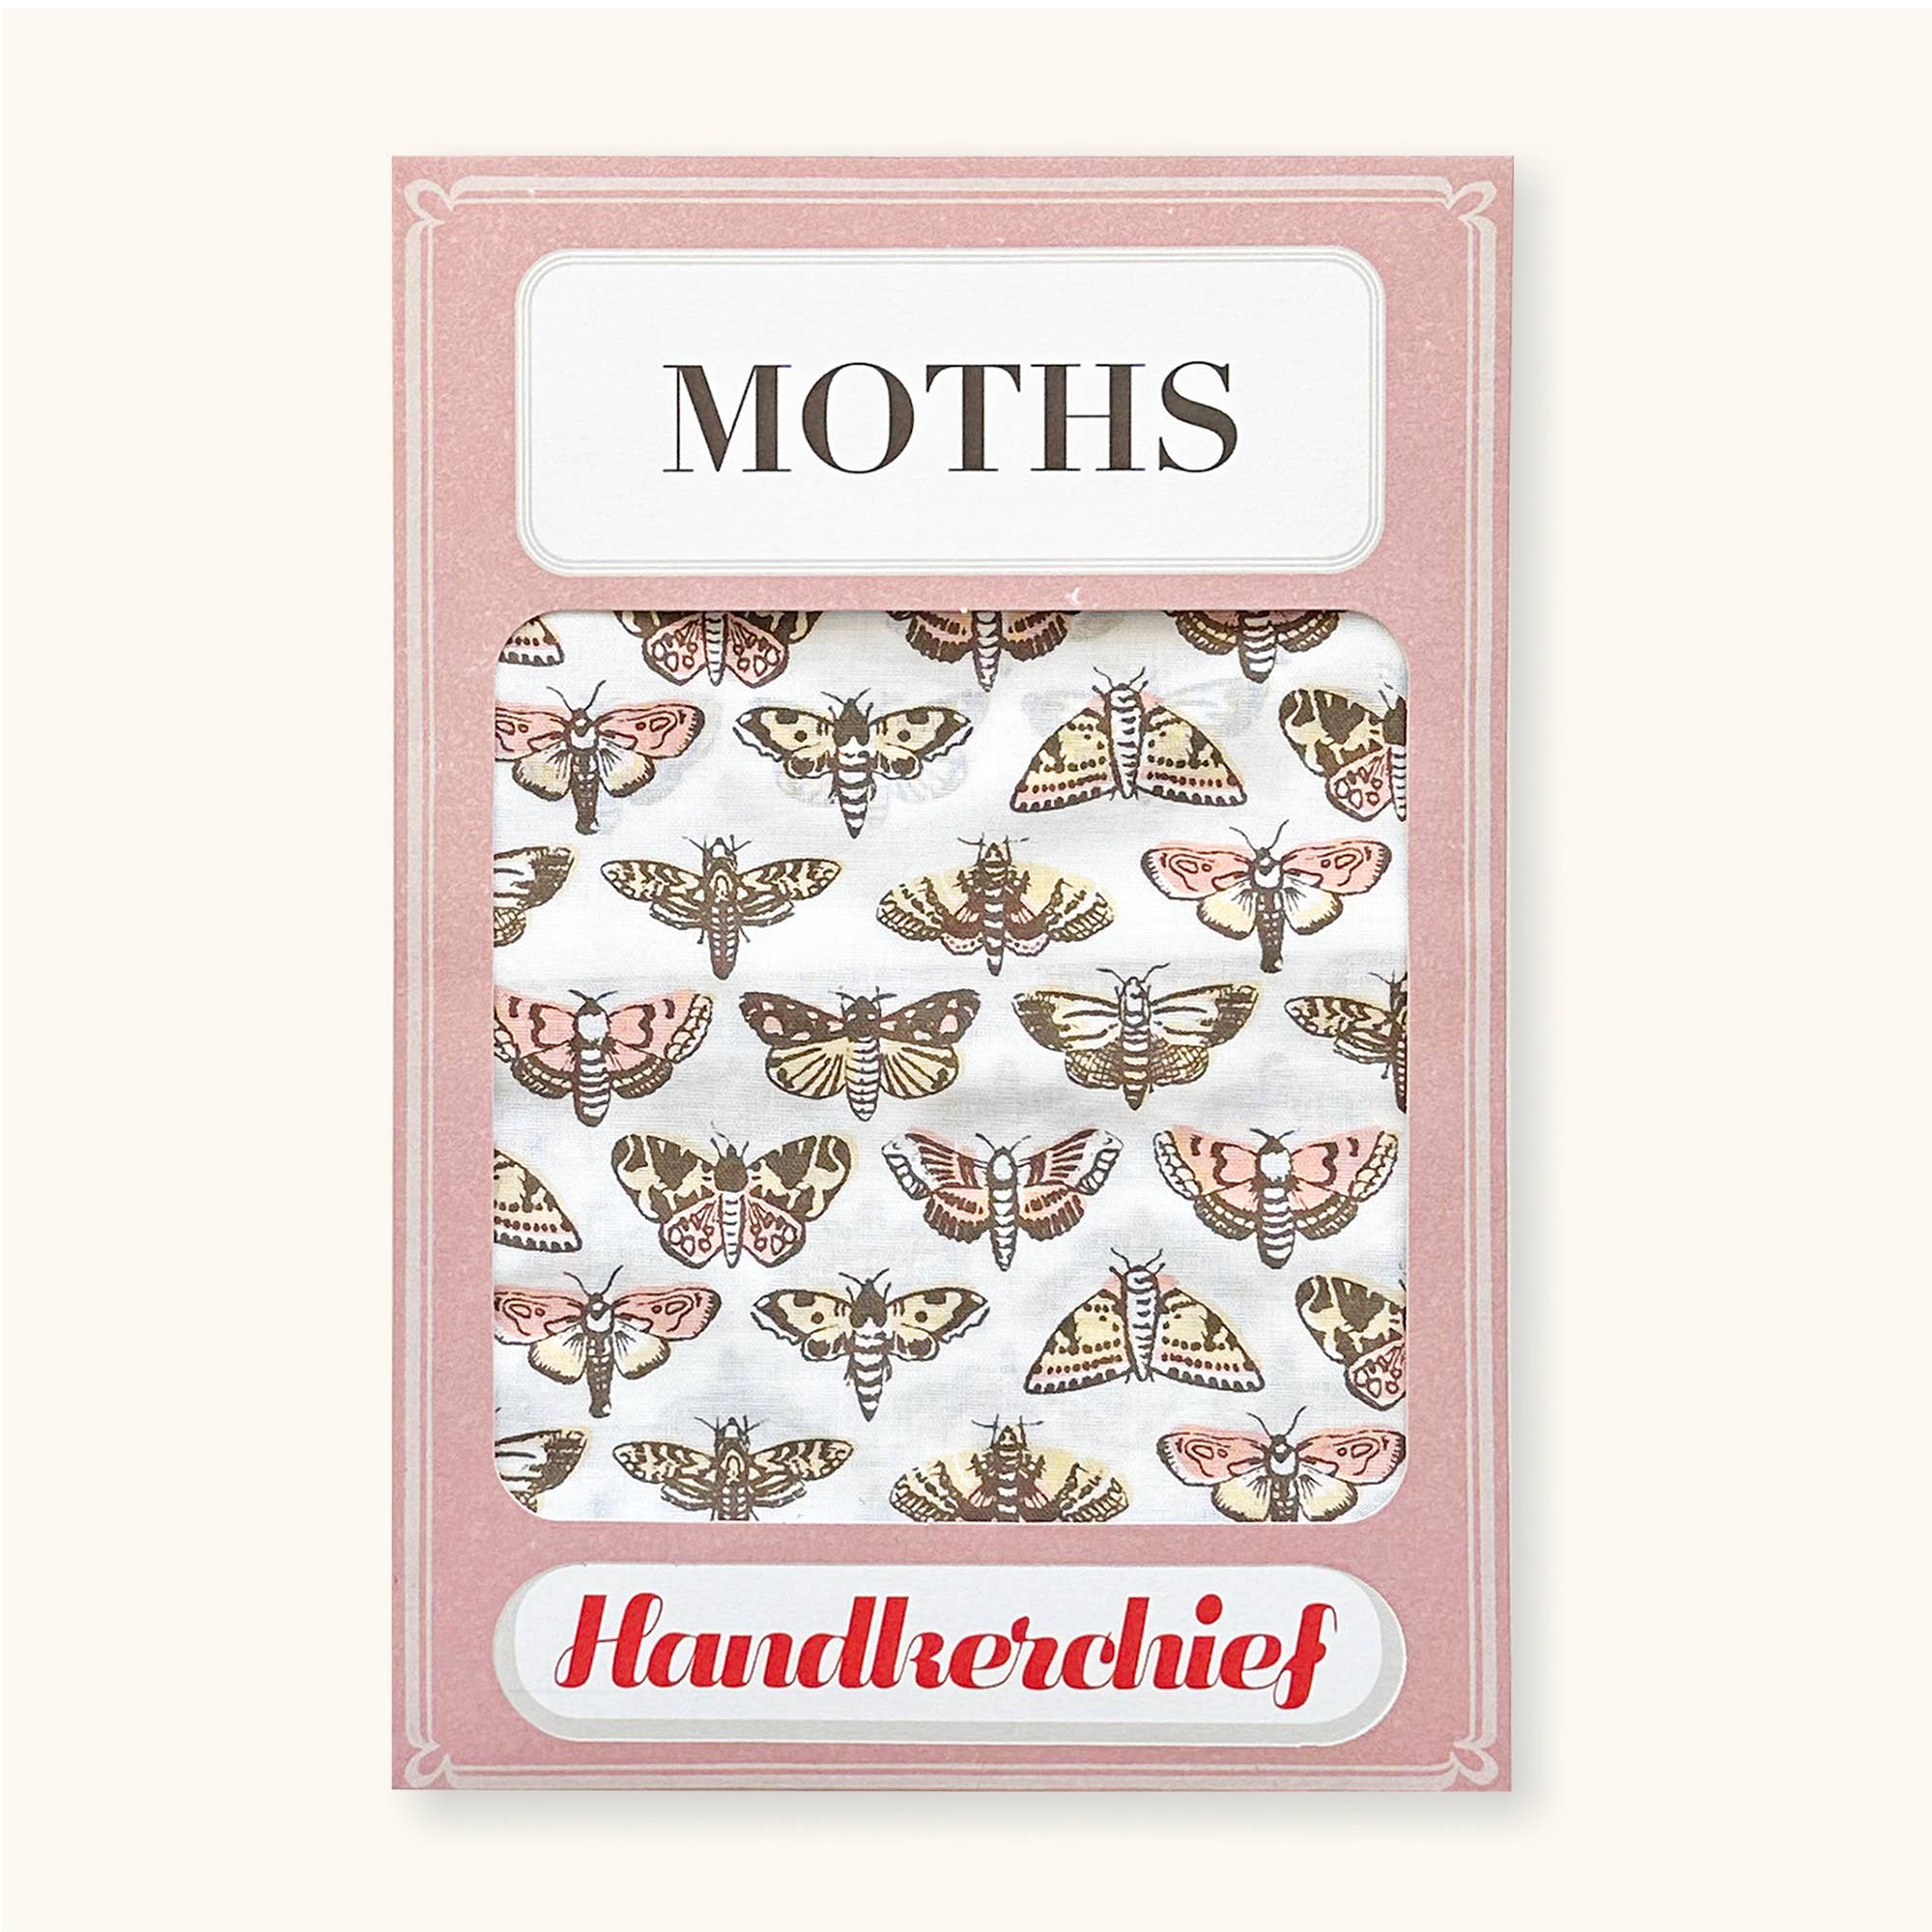 Moths Handkerchief Pocket Square Bandana